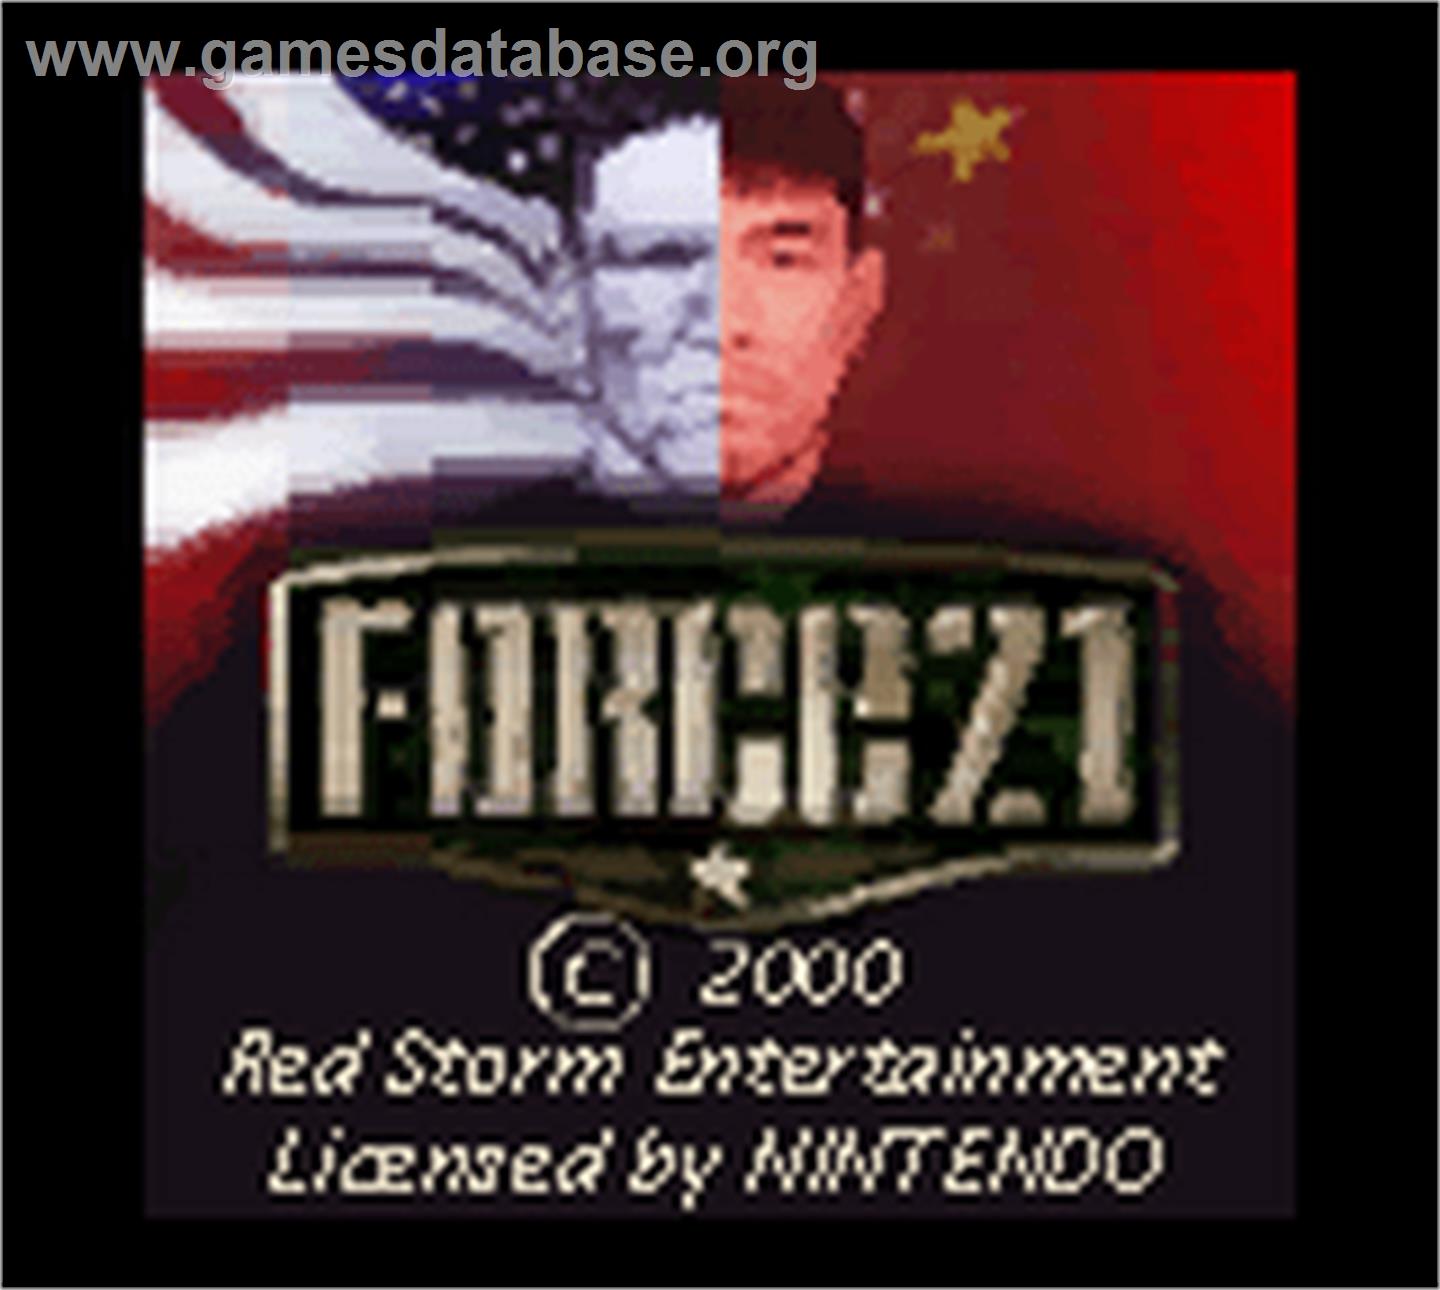 Force 21 - Nintendo Game Boy Color - Artwork - Title Screen